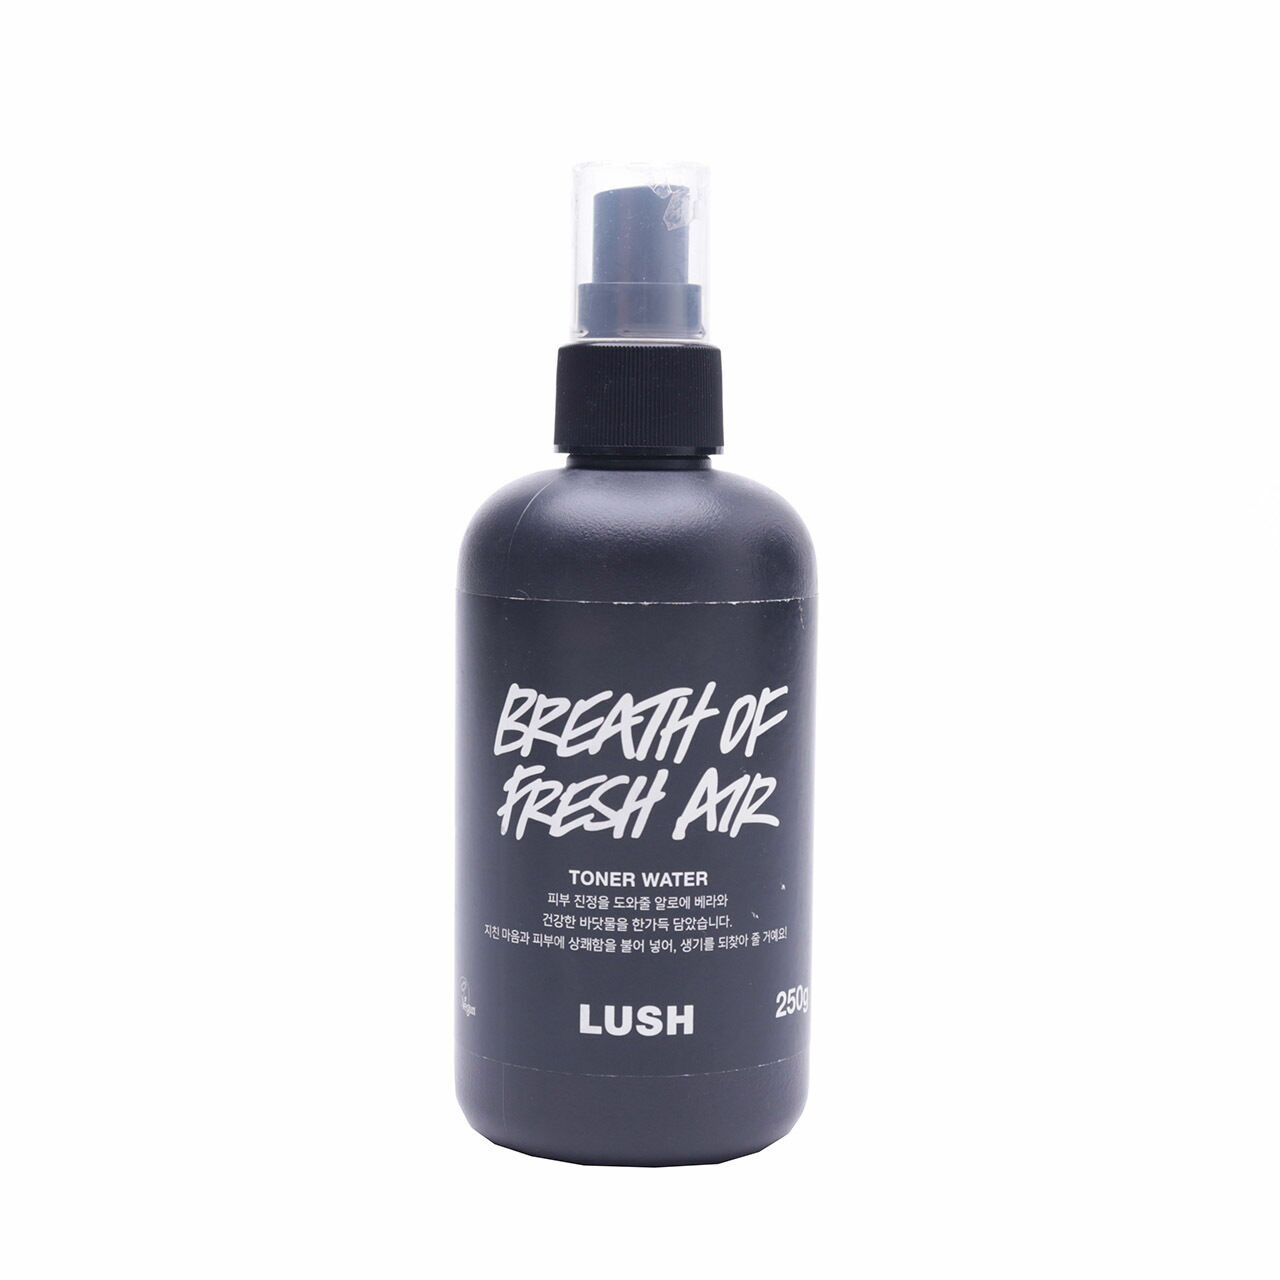 Lush Breath Of Fresh Air Toner Water Skin Care